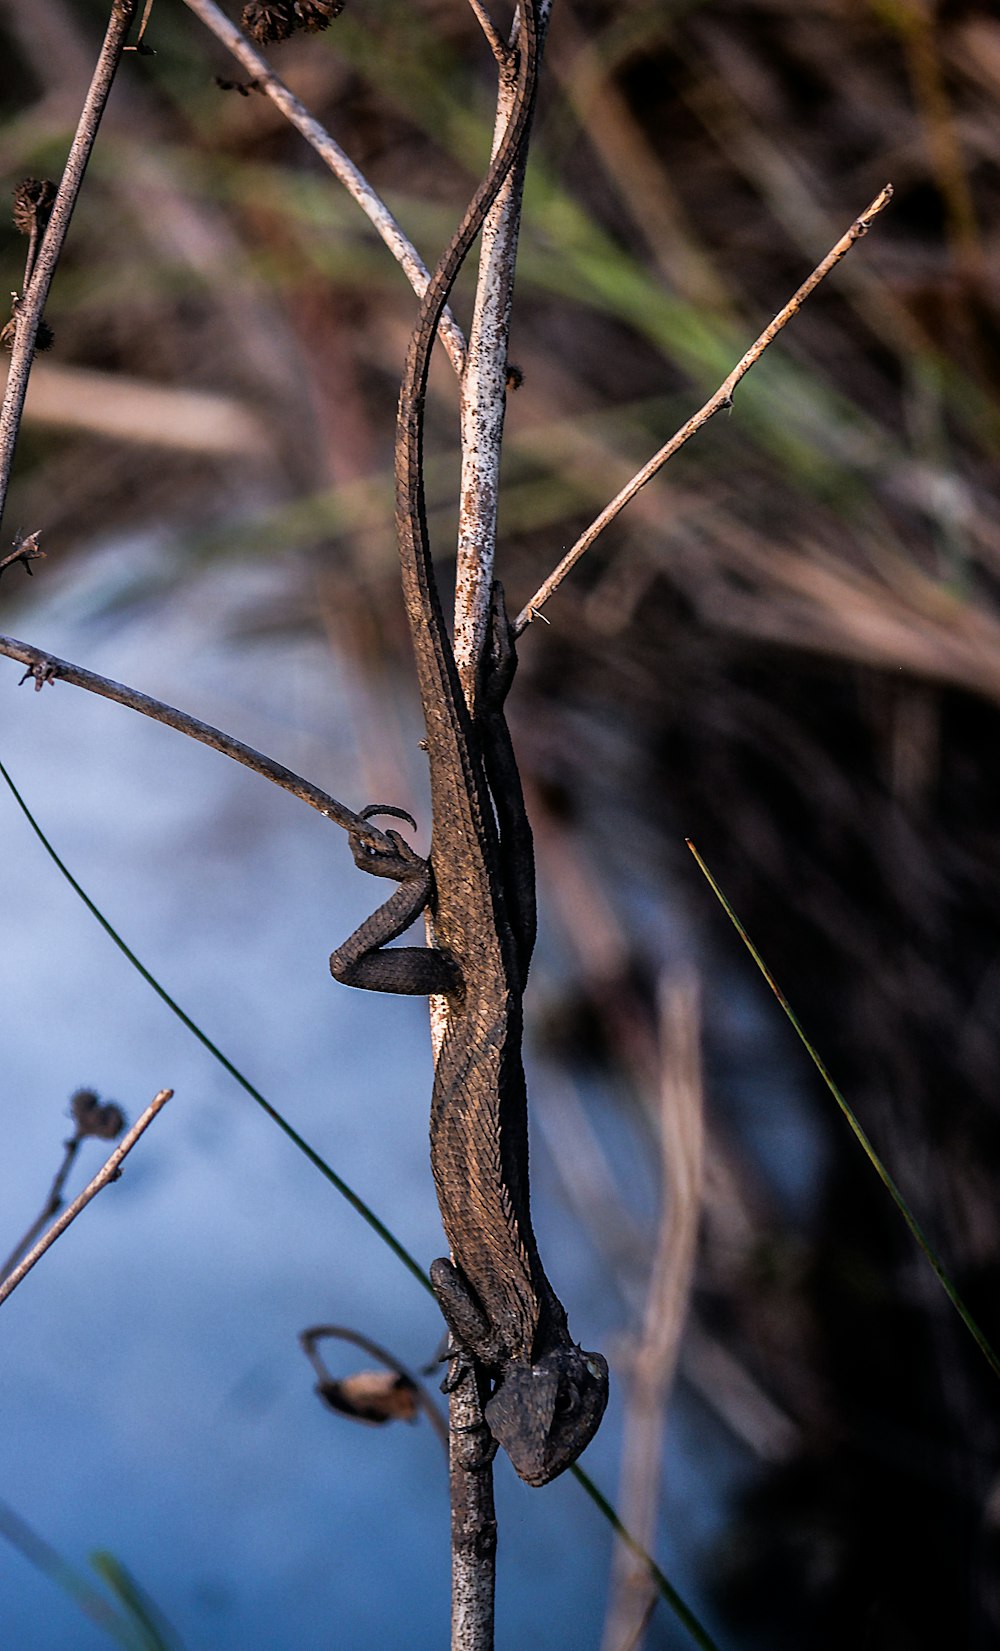 a lizard climbing a tree branch next to a body of water